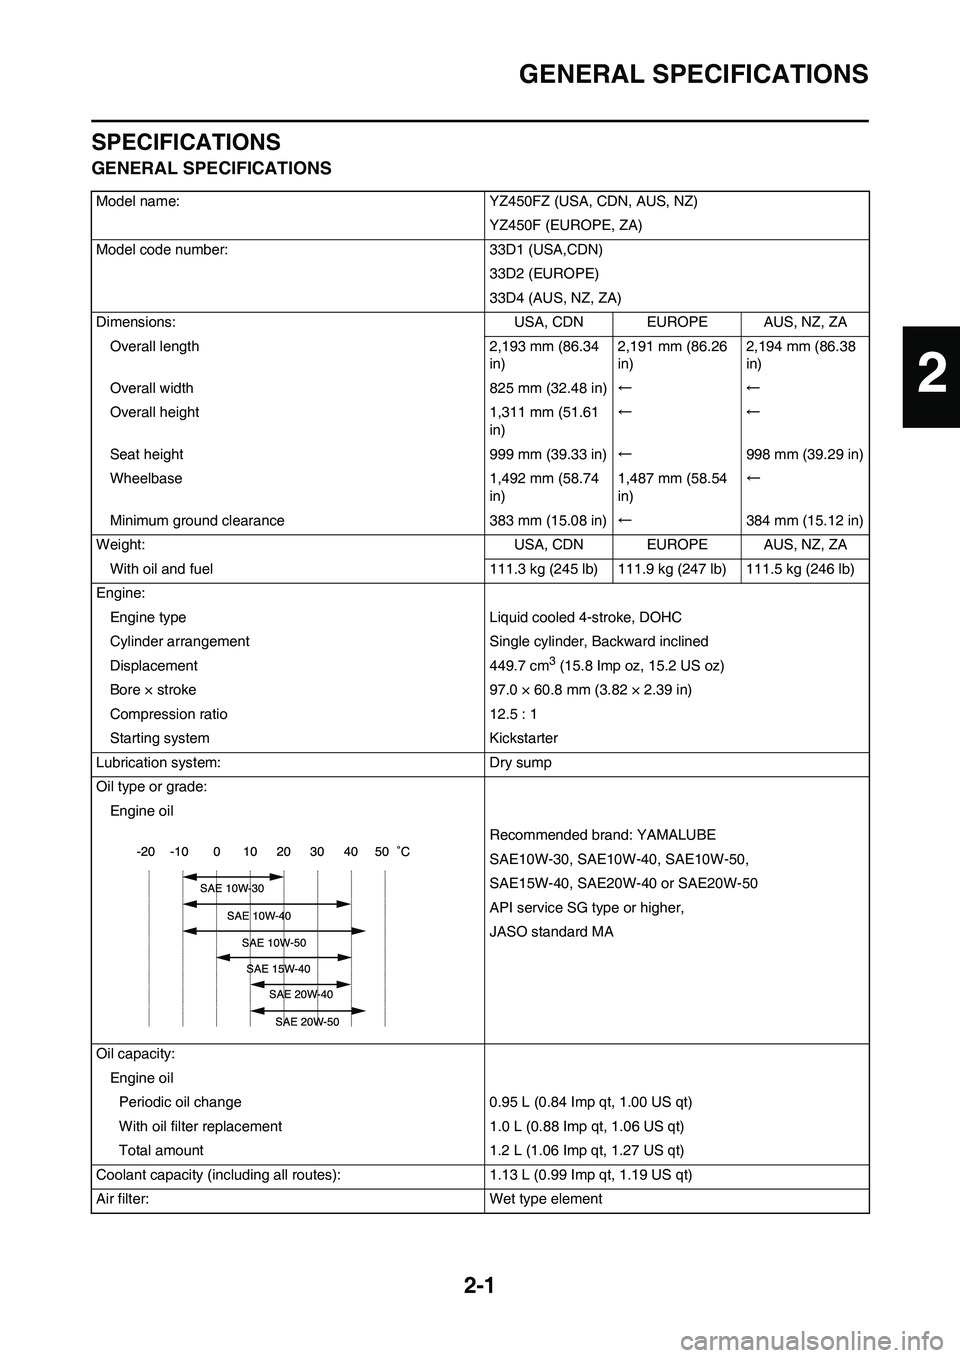 YAMAHA YZ450F 2010  Owners Manual 2-1
GENERAL SPECIFICATIONS
SPECIFICATIONS
GENERAL SPECIFICATIONS
Model name: YZ450FZ (USA, CDN, AUS, NZ)
YZ450F (EUROPE, ZA)
Model code number: 33D1 (USA,CDN)
33D2 (EUROPE)
33D4 (AUS, NZ, ZA)
Dimensio